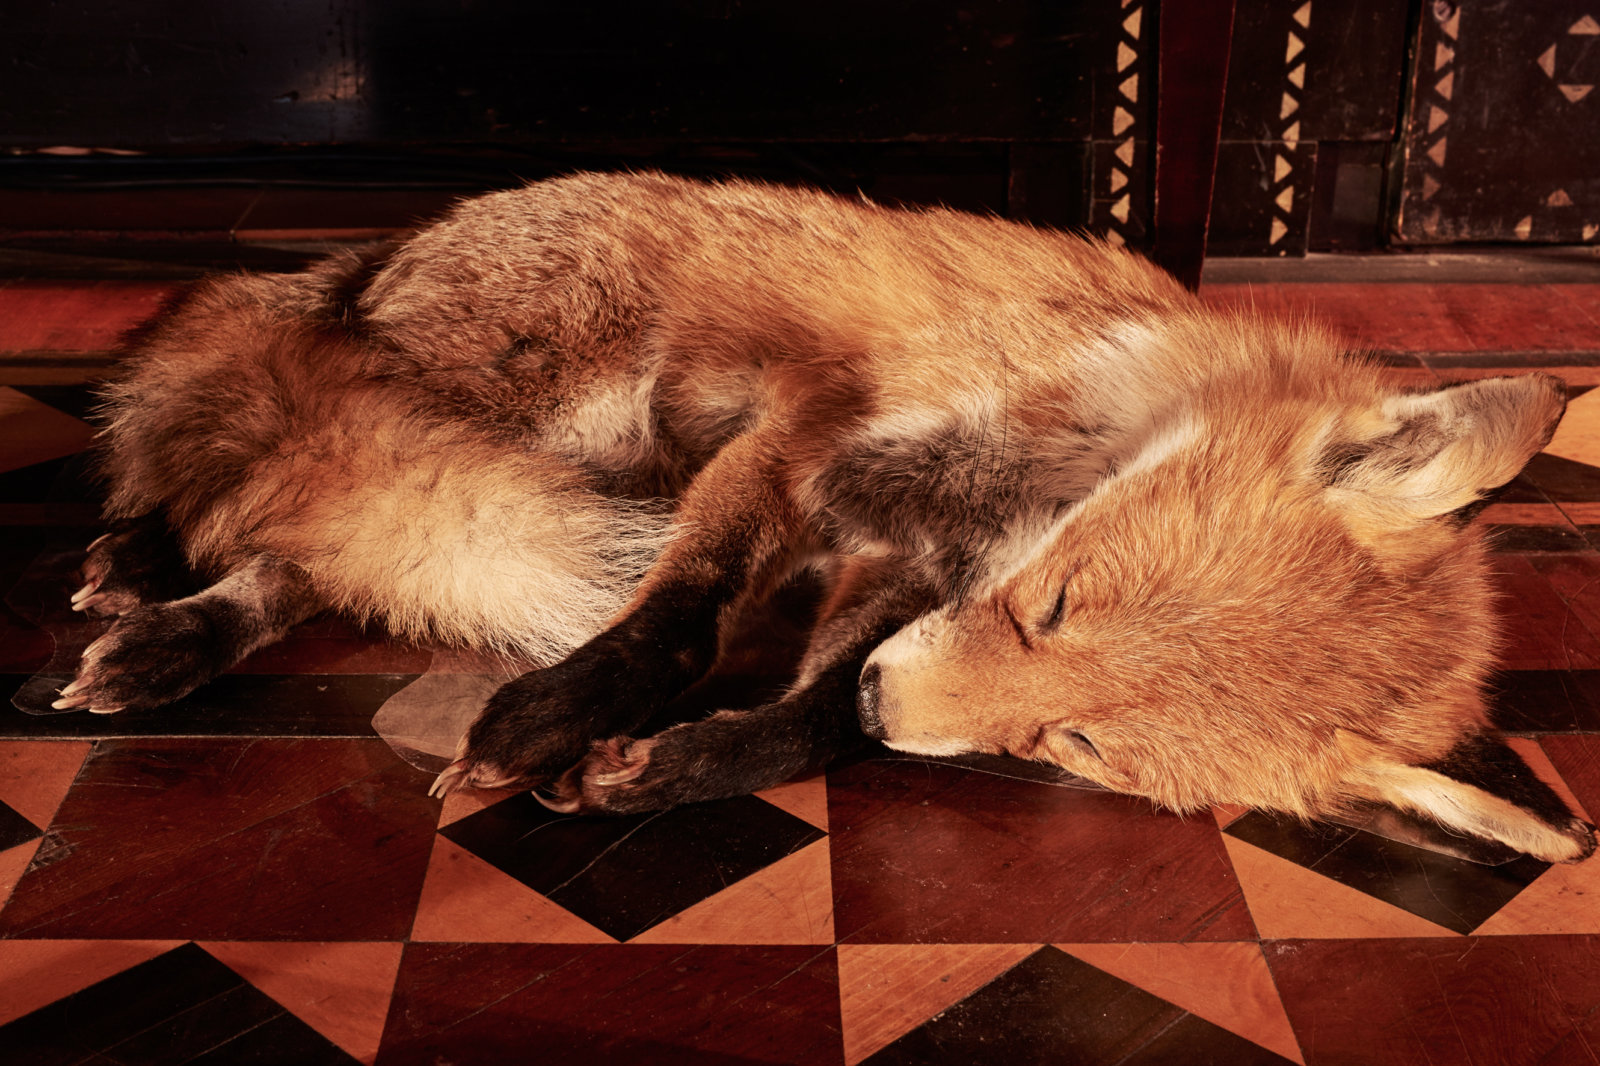 Abbas Akhavan, Fatigues, 2017, taxidermy animal (red fox), 5 x 22 x 16 in. (13 x 55 x 40 cm). Installation view, Museum Villa Stuck, Munich, Germany, 2017